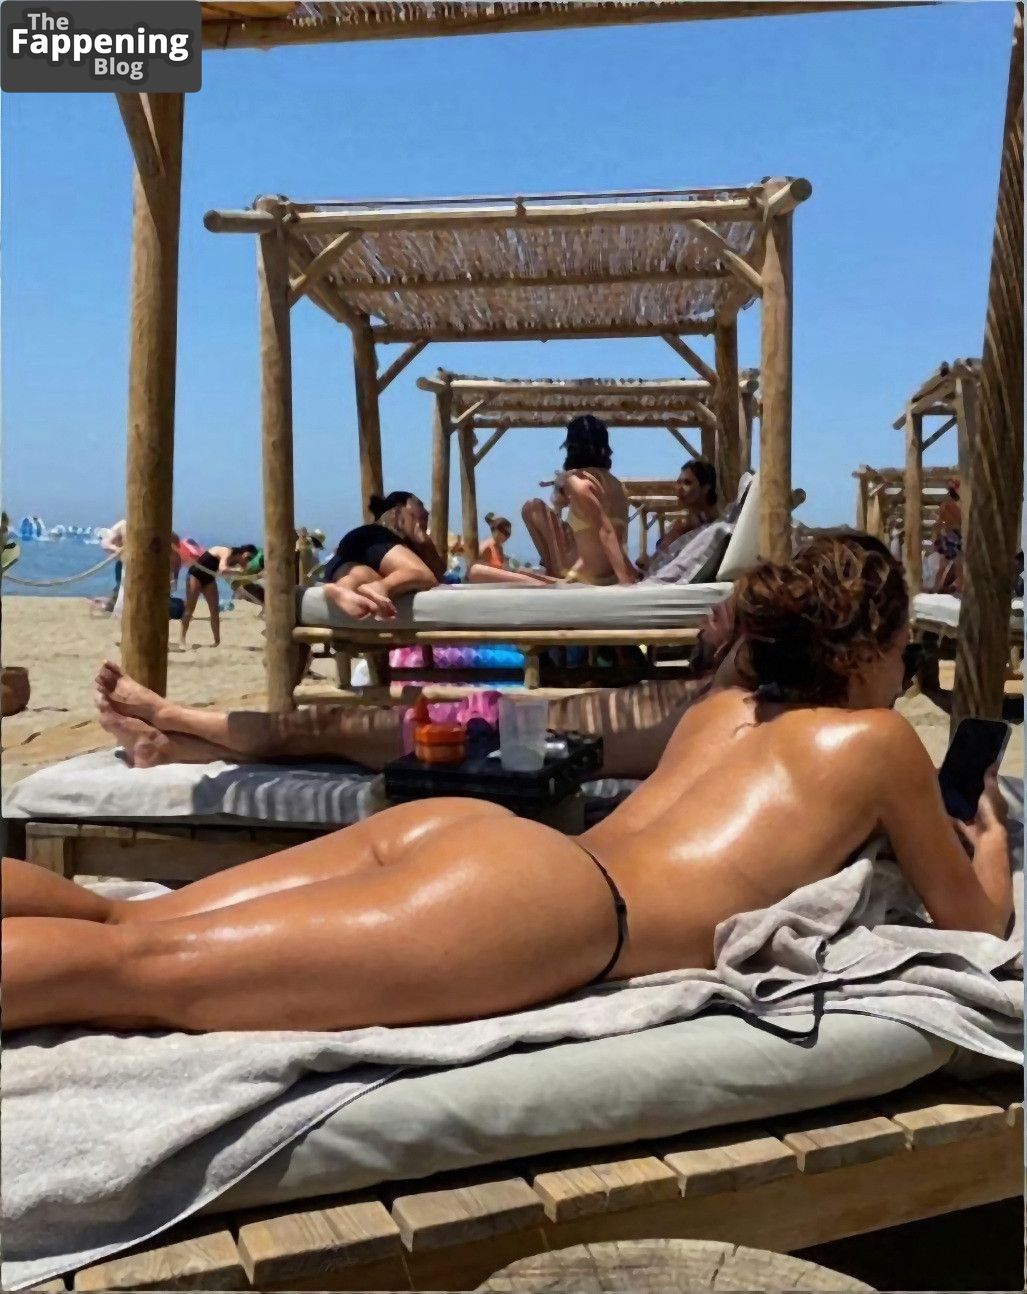 Eva Longoria Hot (10 Photos)